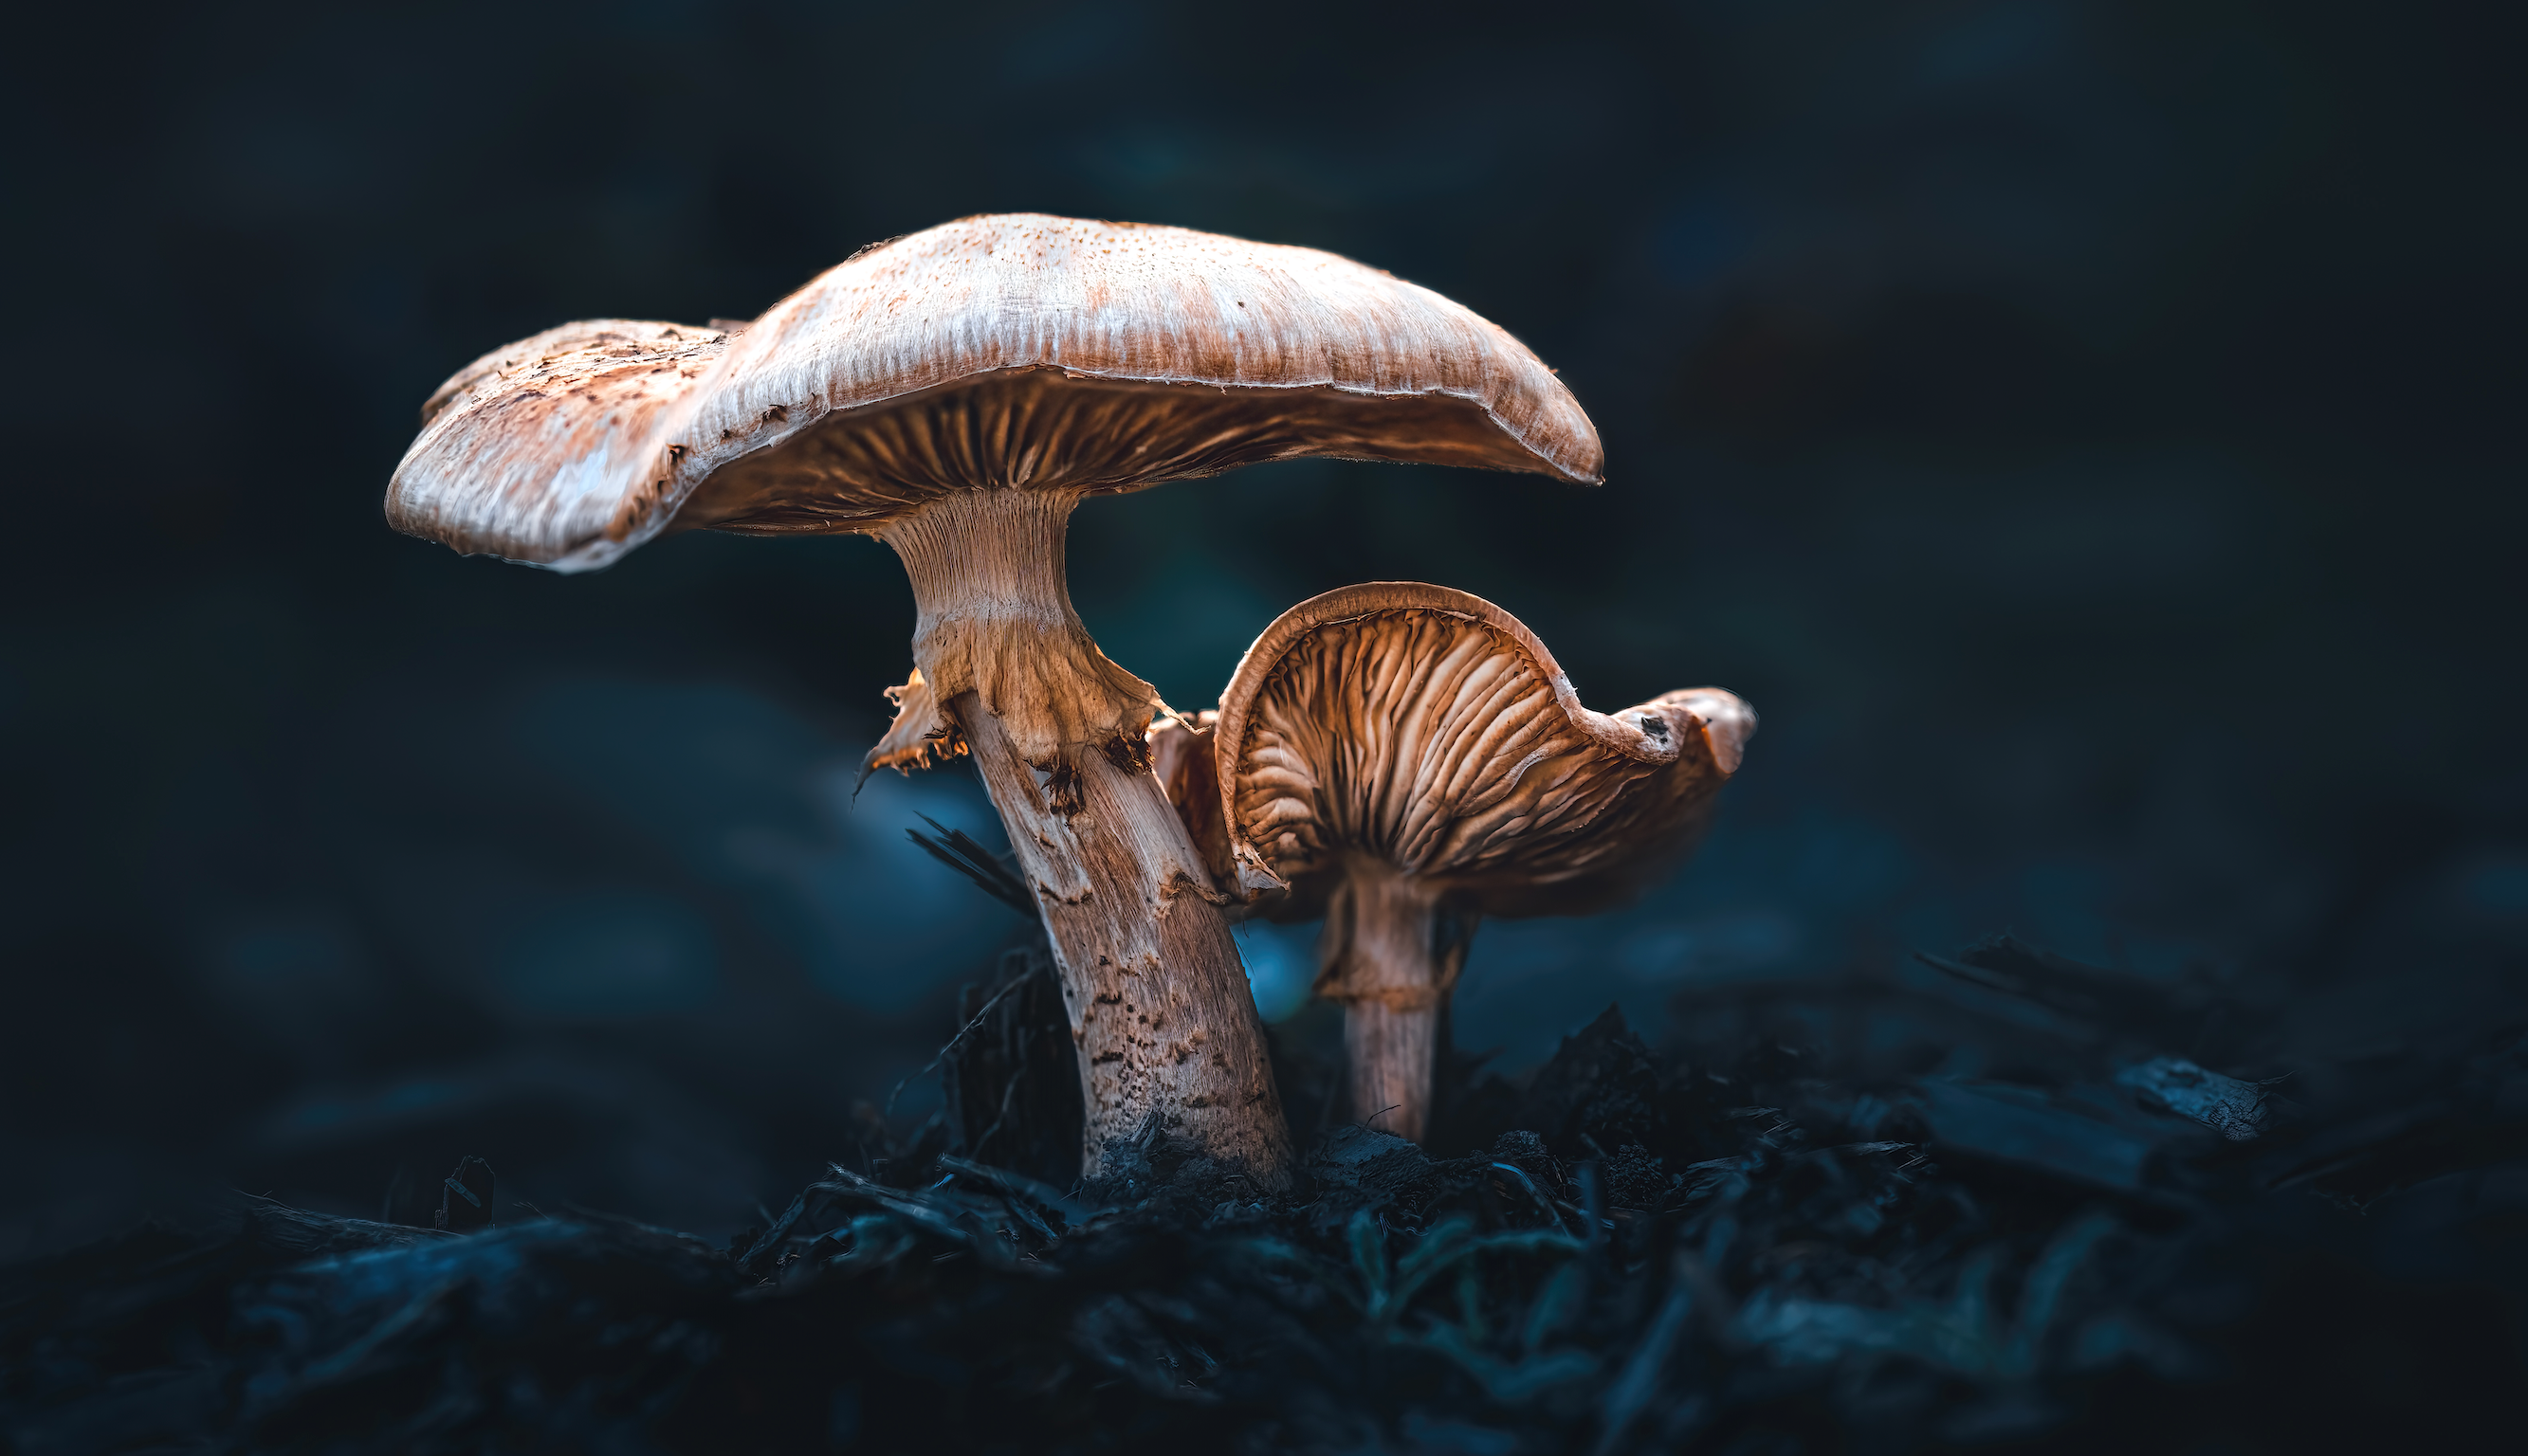 a photo of a mushroom